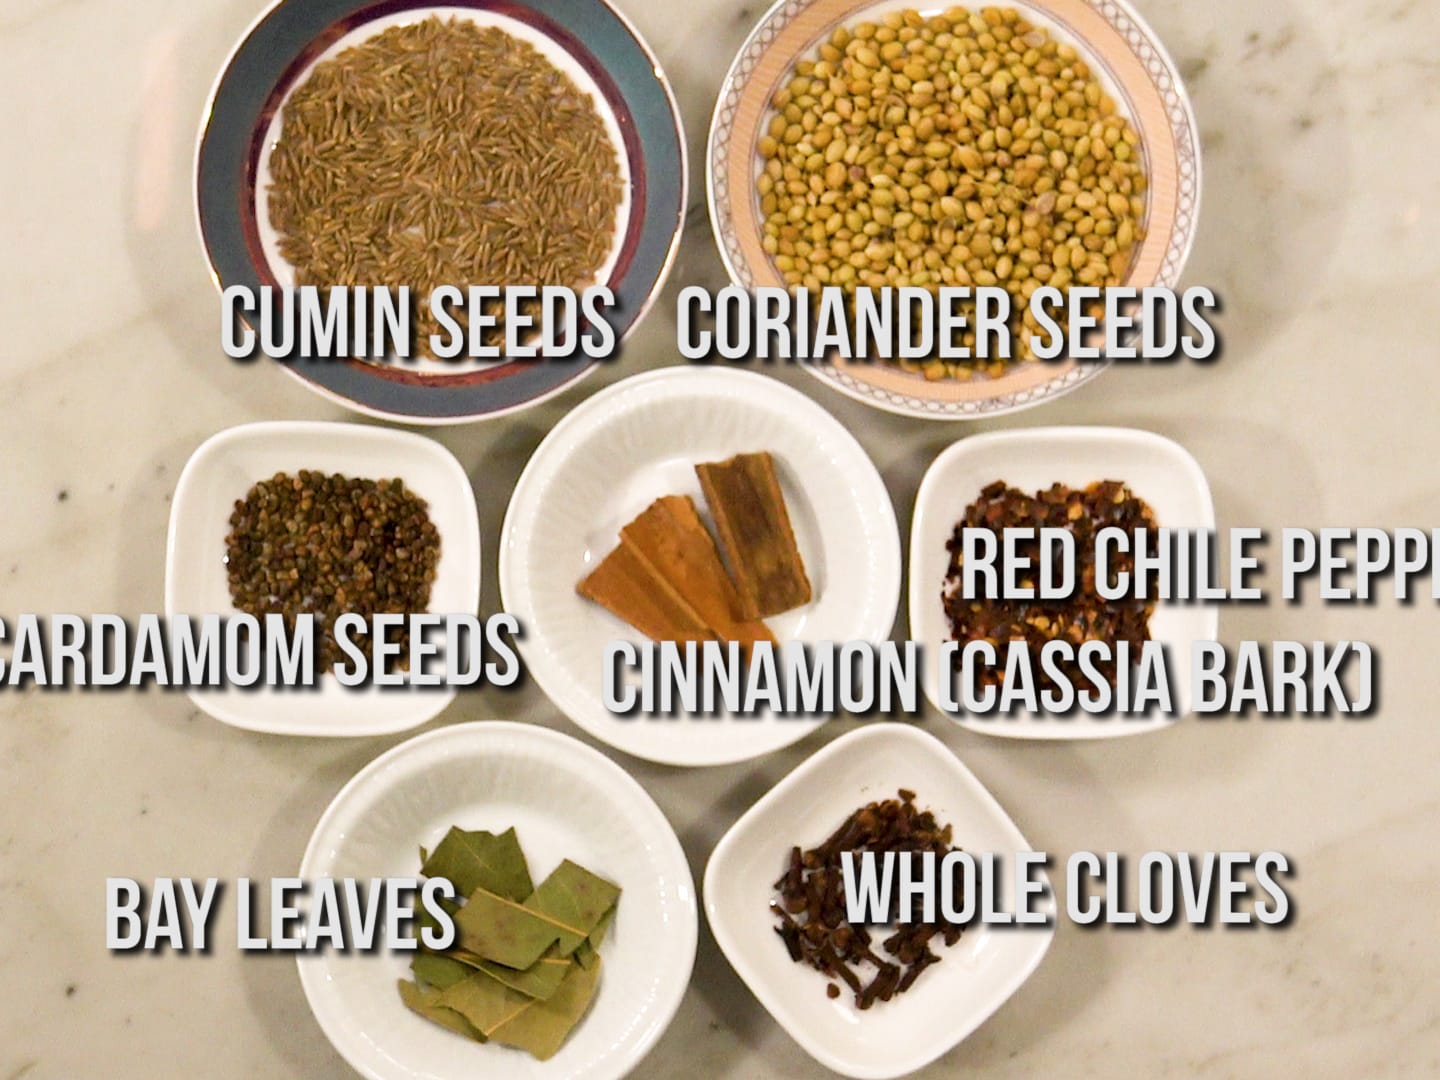 Indian Garam Masala Recipe, Recipe